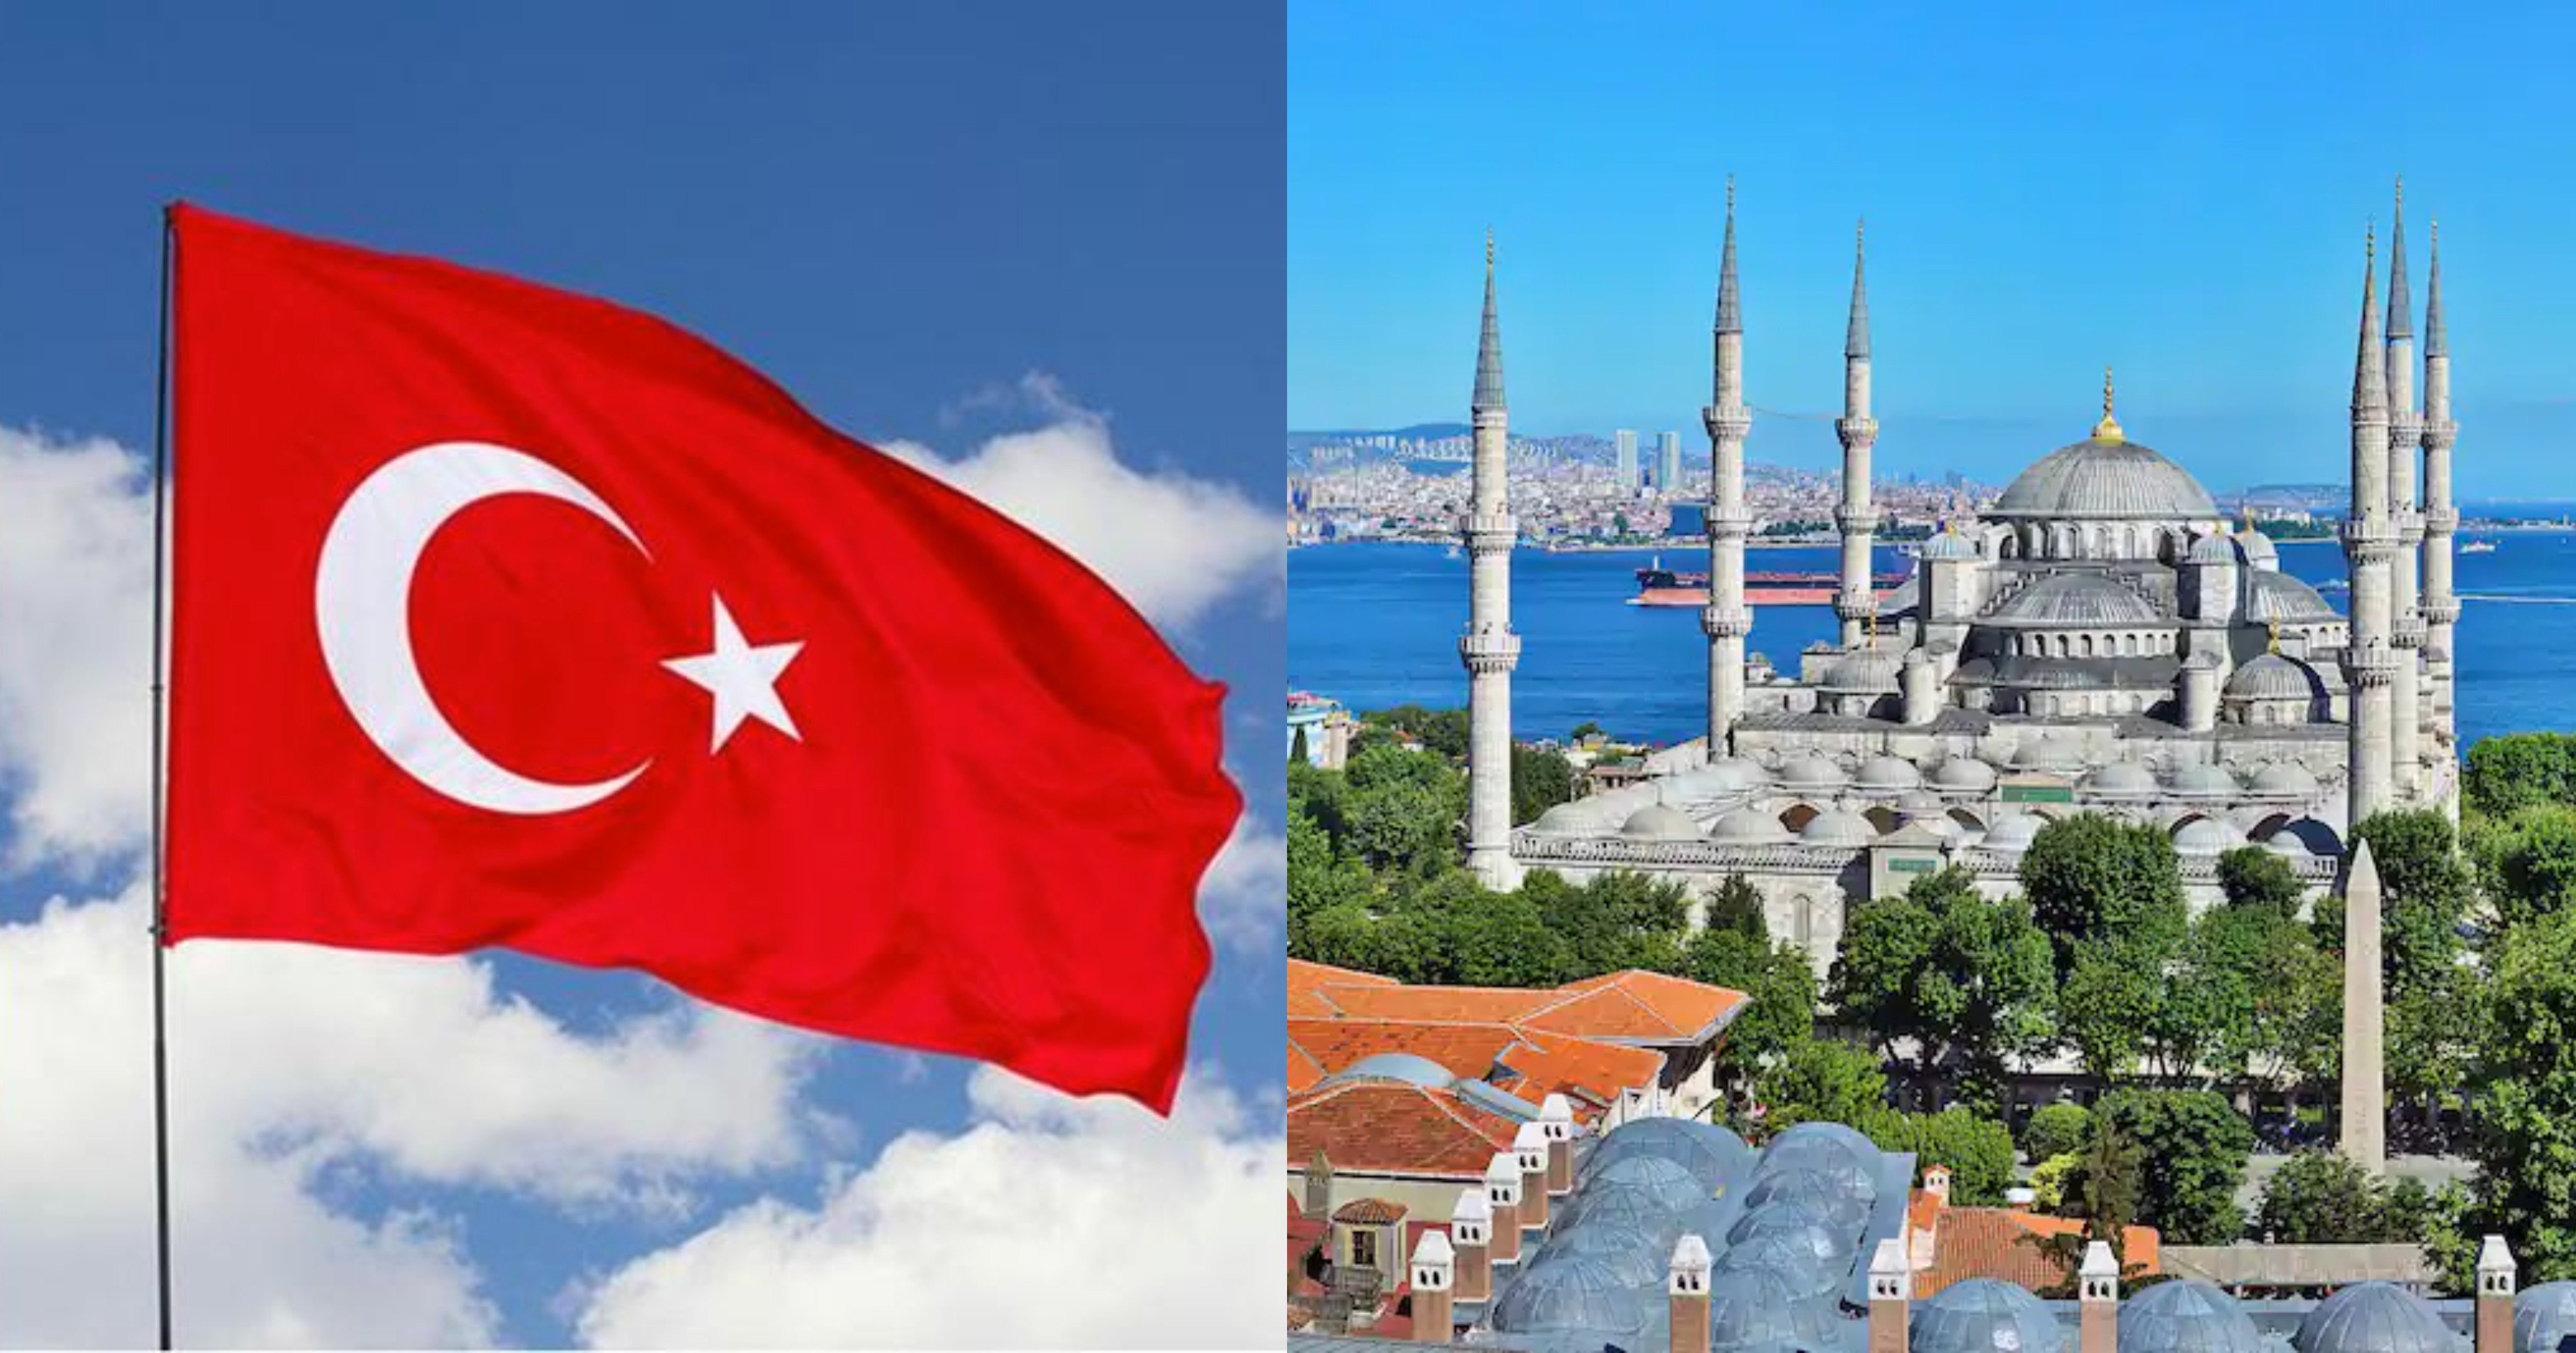 1108f6cd 2050 4357 9be7 17f31a6462fe.jpeg?resize=412,232 - "여러분 앞으로 터키는  '이렇게' 불러야합니다" 터키 공식 국가명 바뀌었다